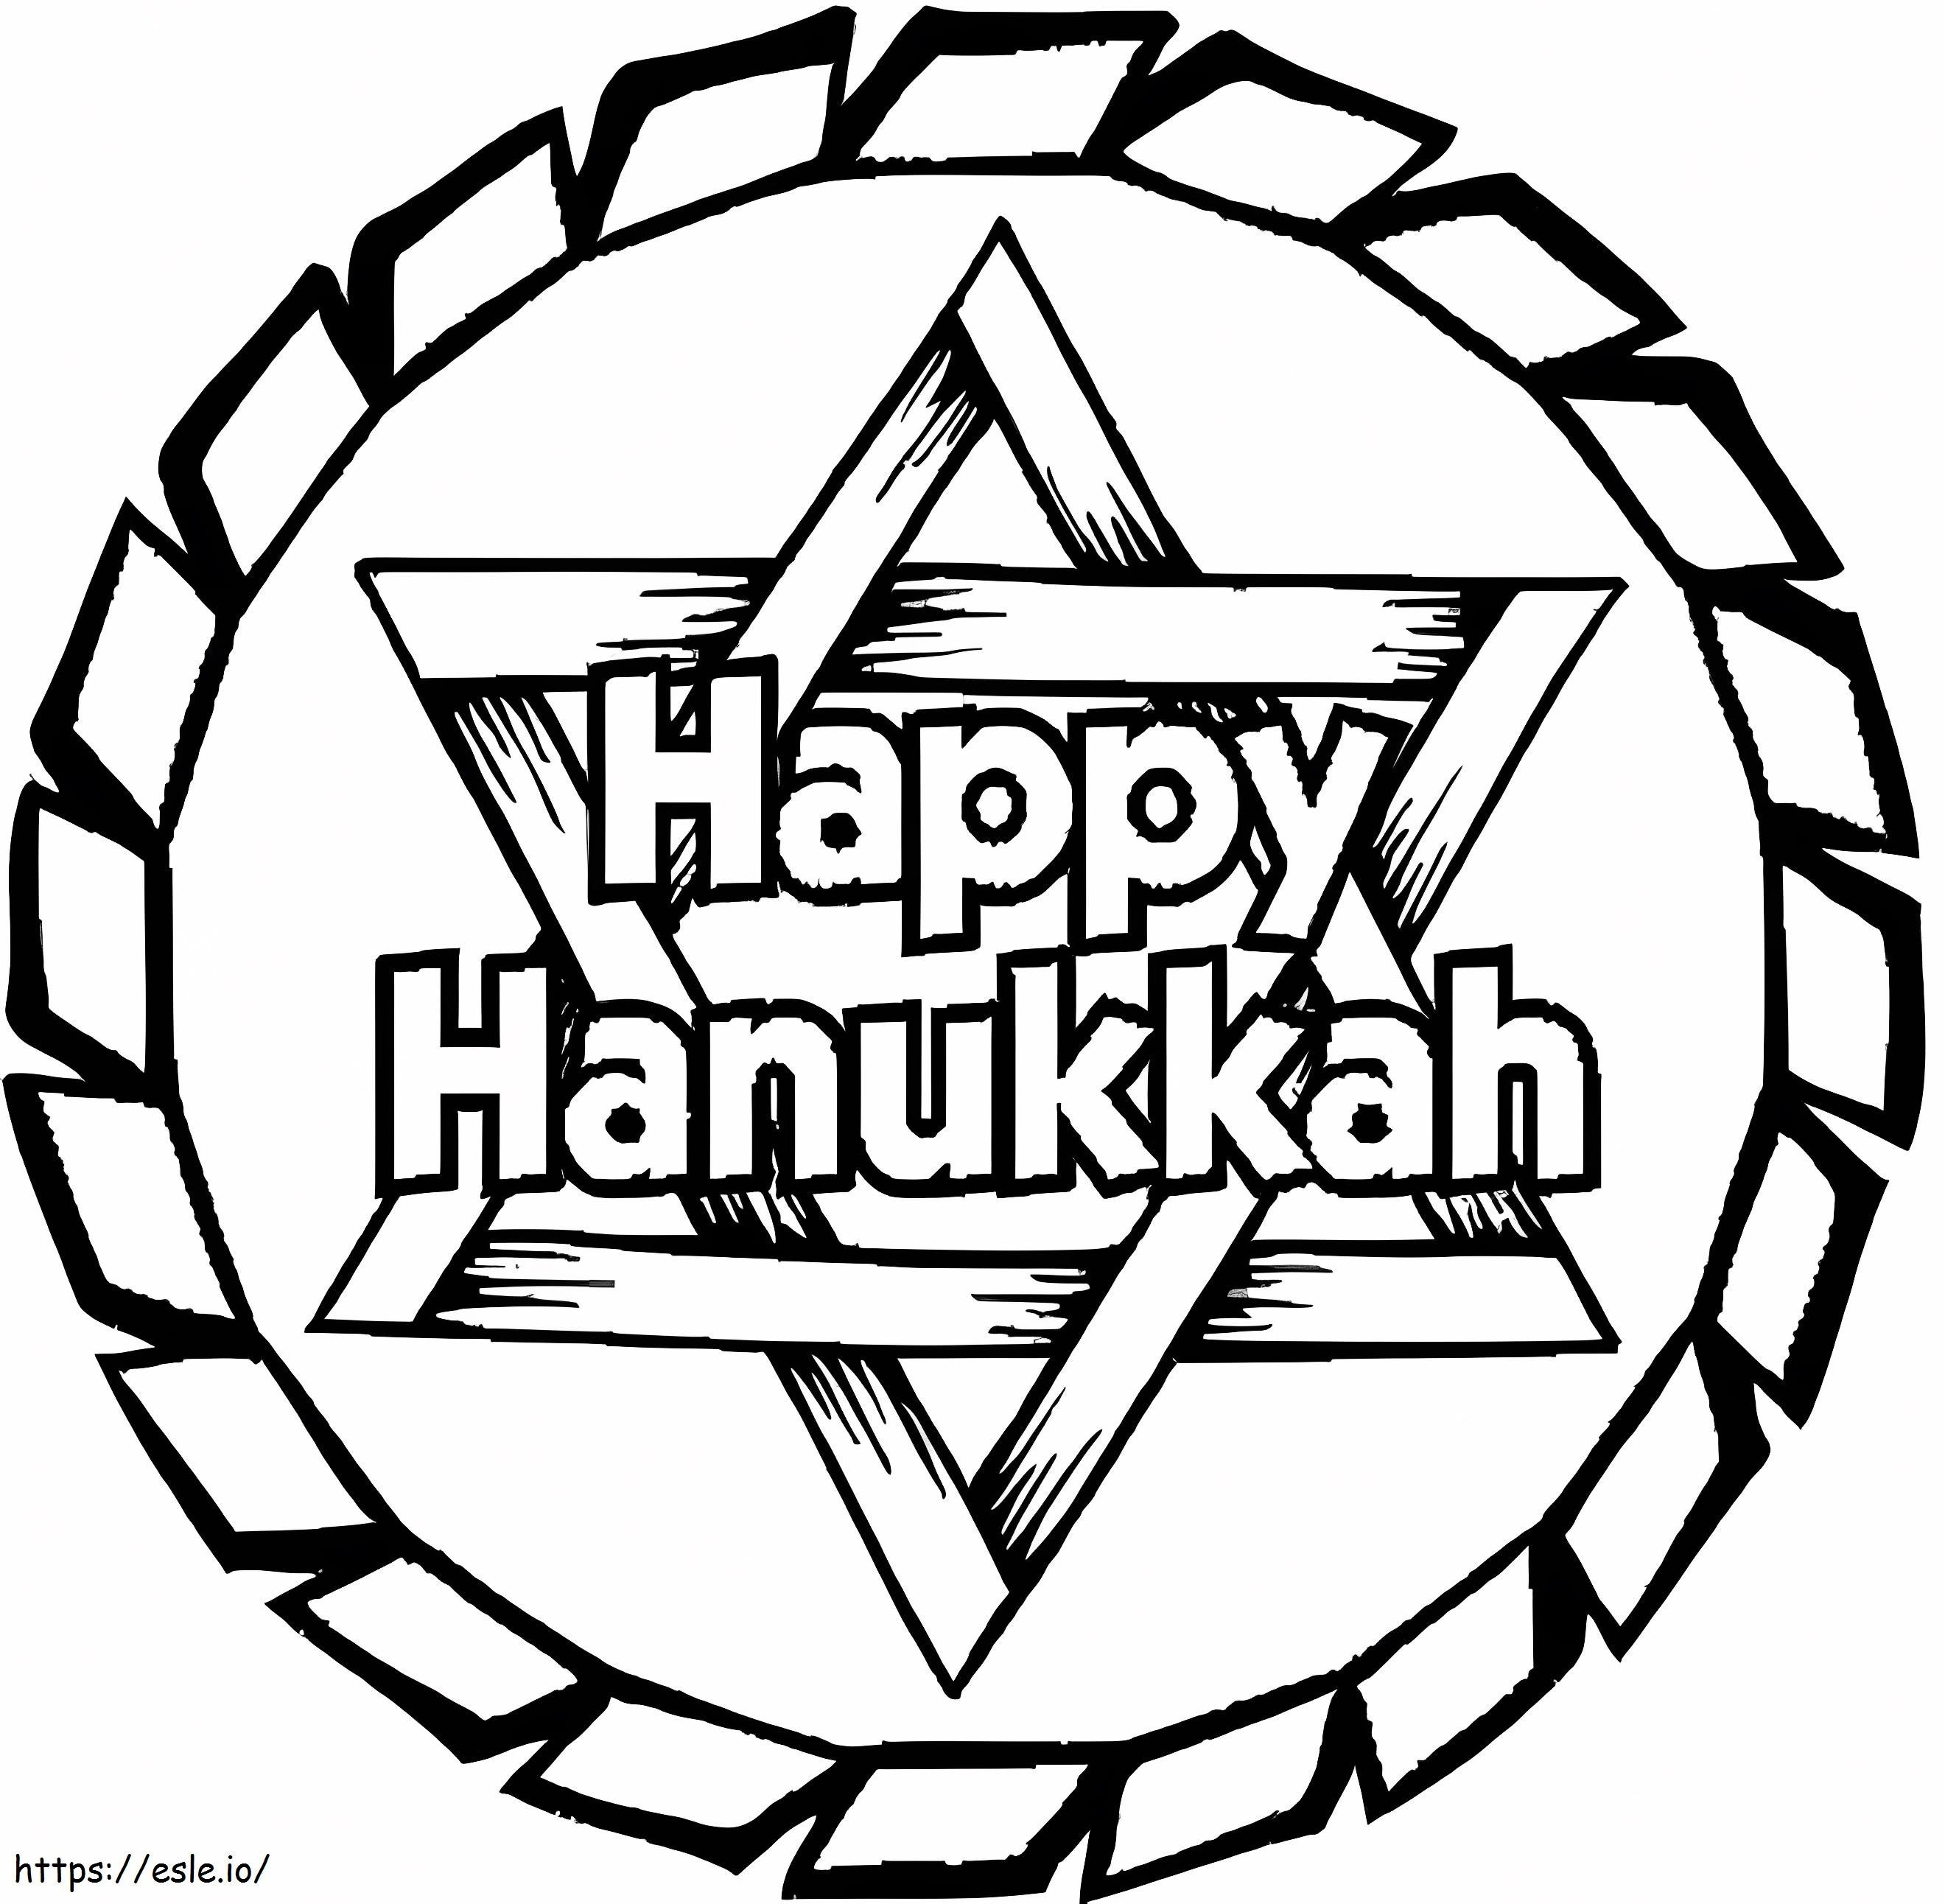 Felice Hanukkah stampabile da colorare